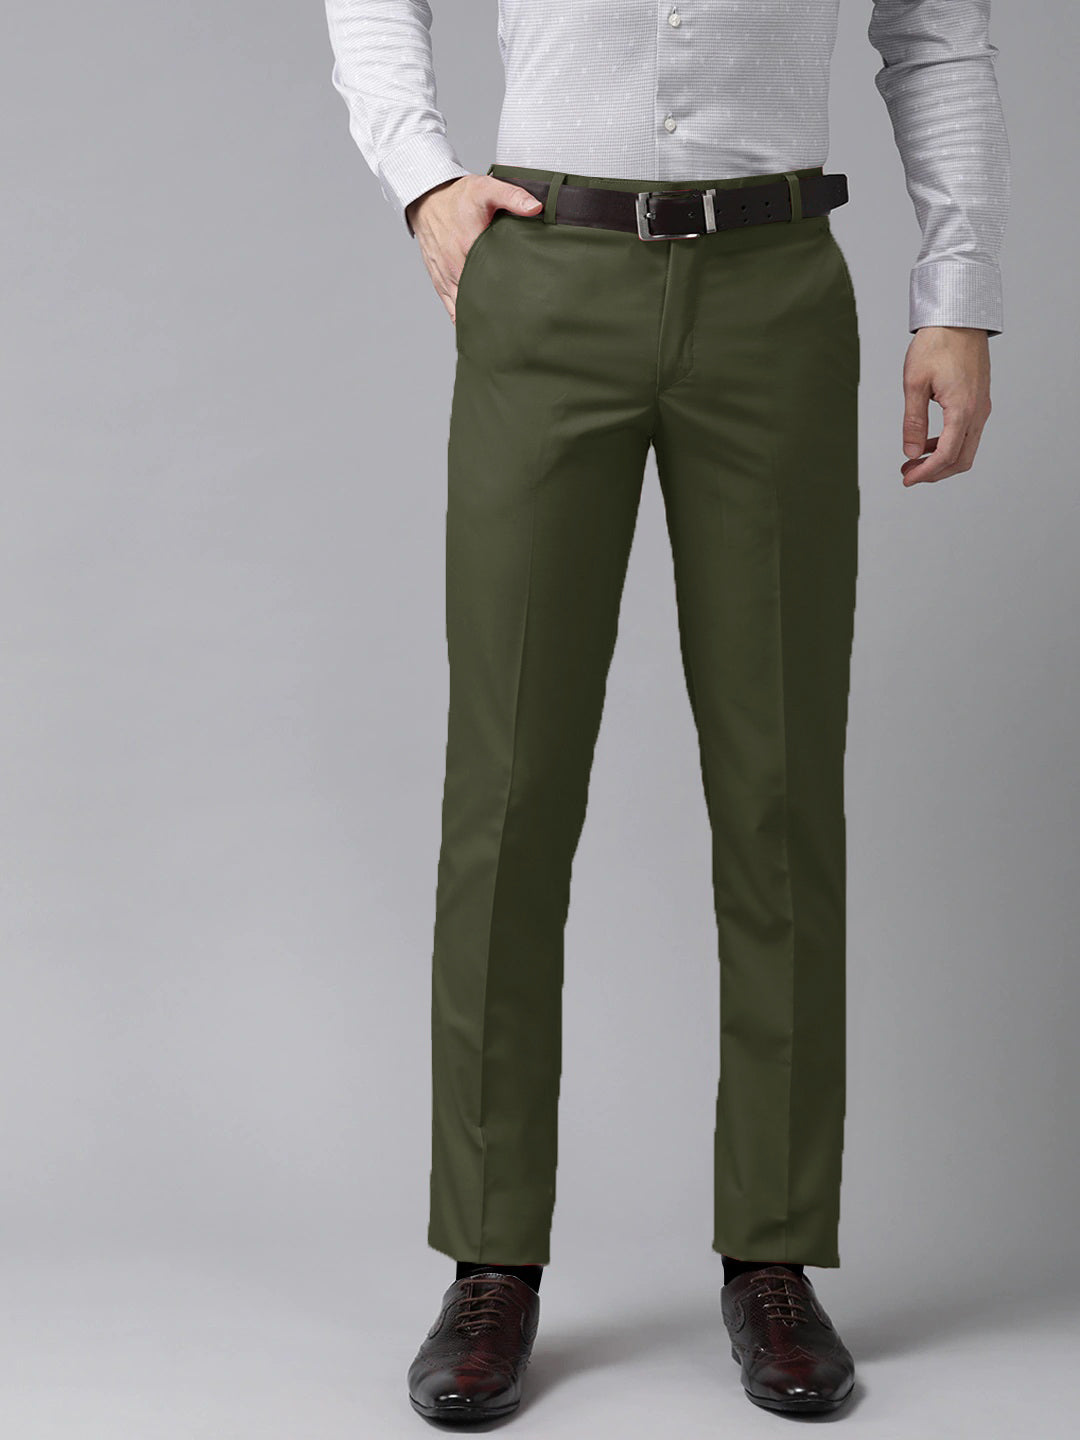 Bar III Men's Slim-Fit Emerald Green Suit Separate Pants, Created for  Macy's - Macy's